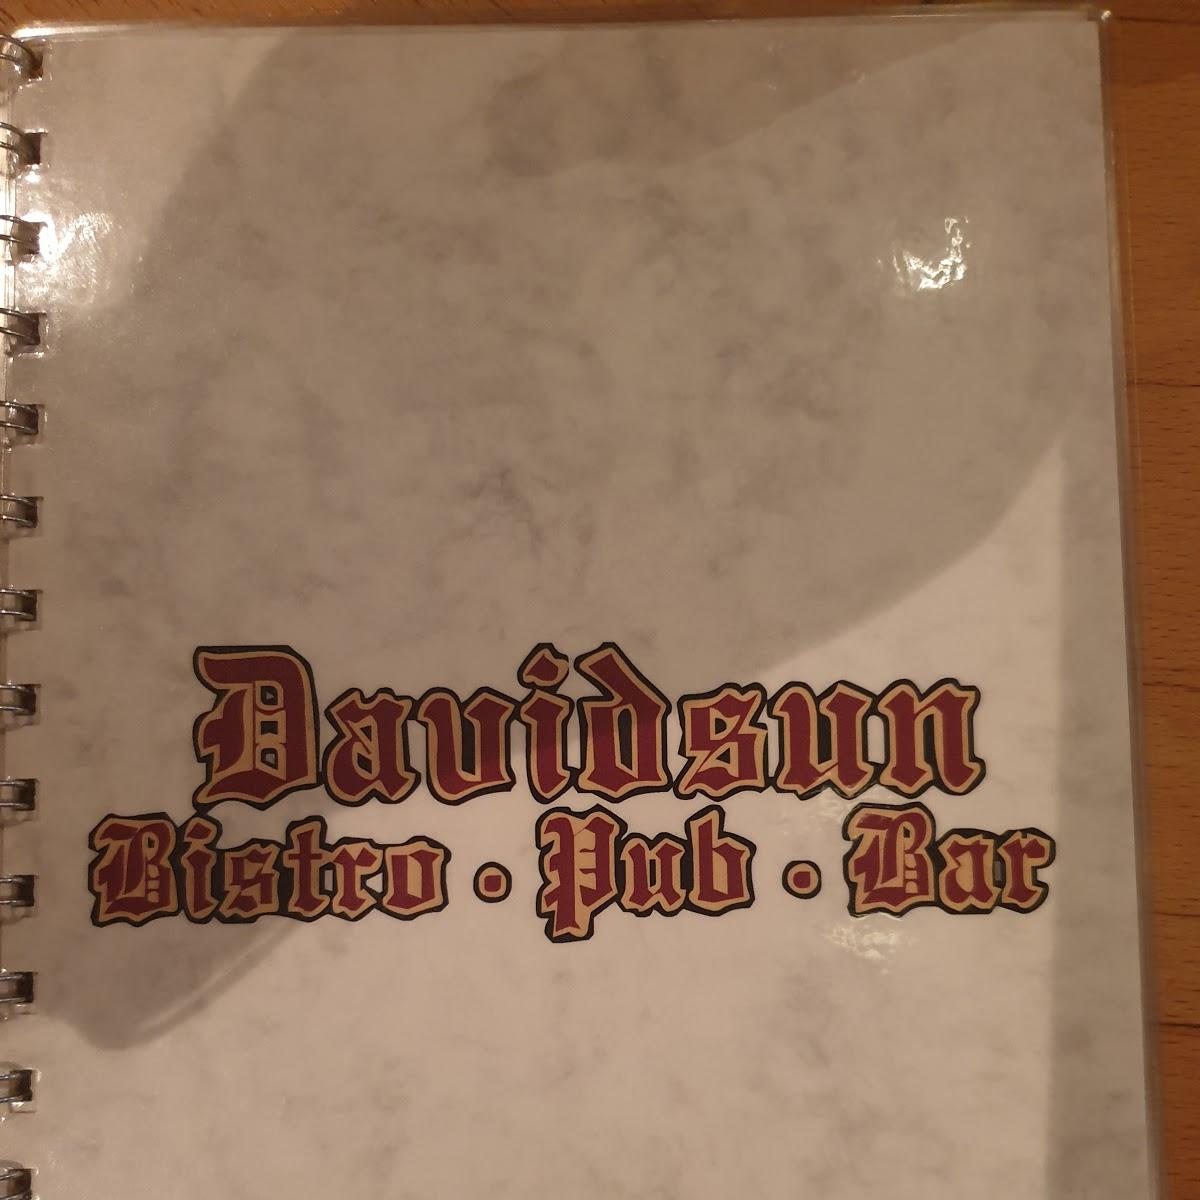 Restaurant "Bistro * Pub * Bar Davidsun" in Wutöschingen